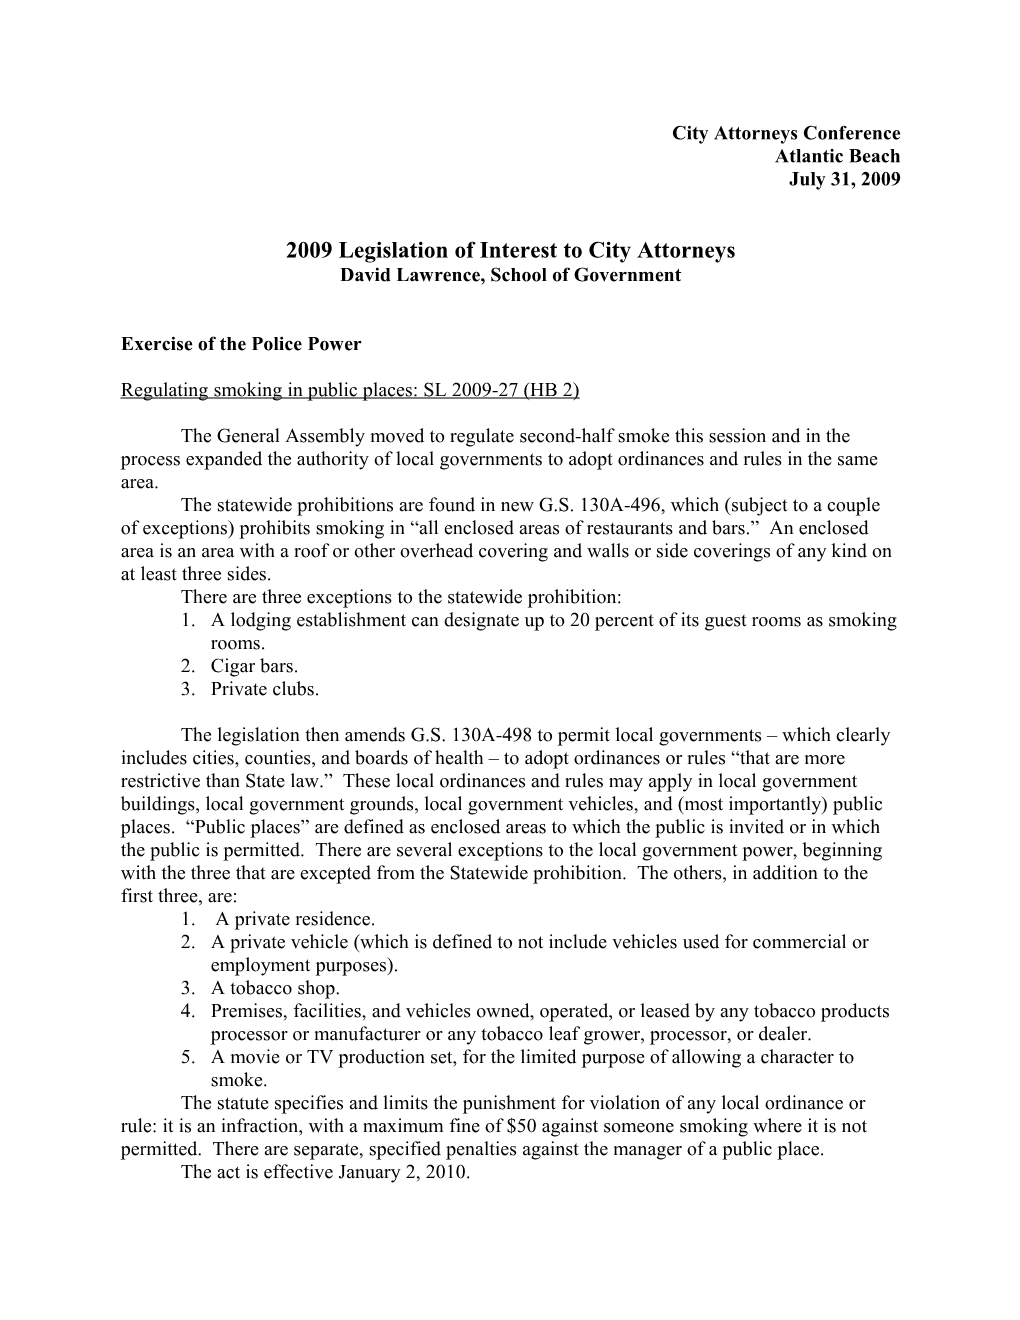 2009 Legislation of Interest to City Attorneys